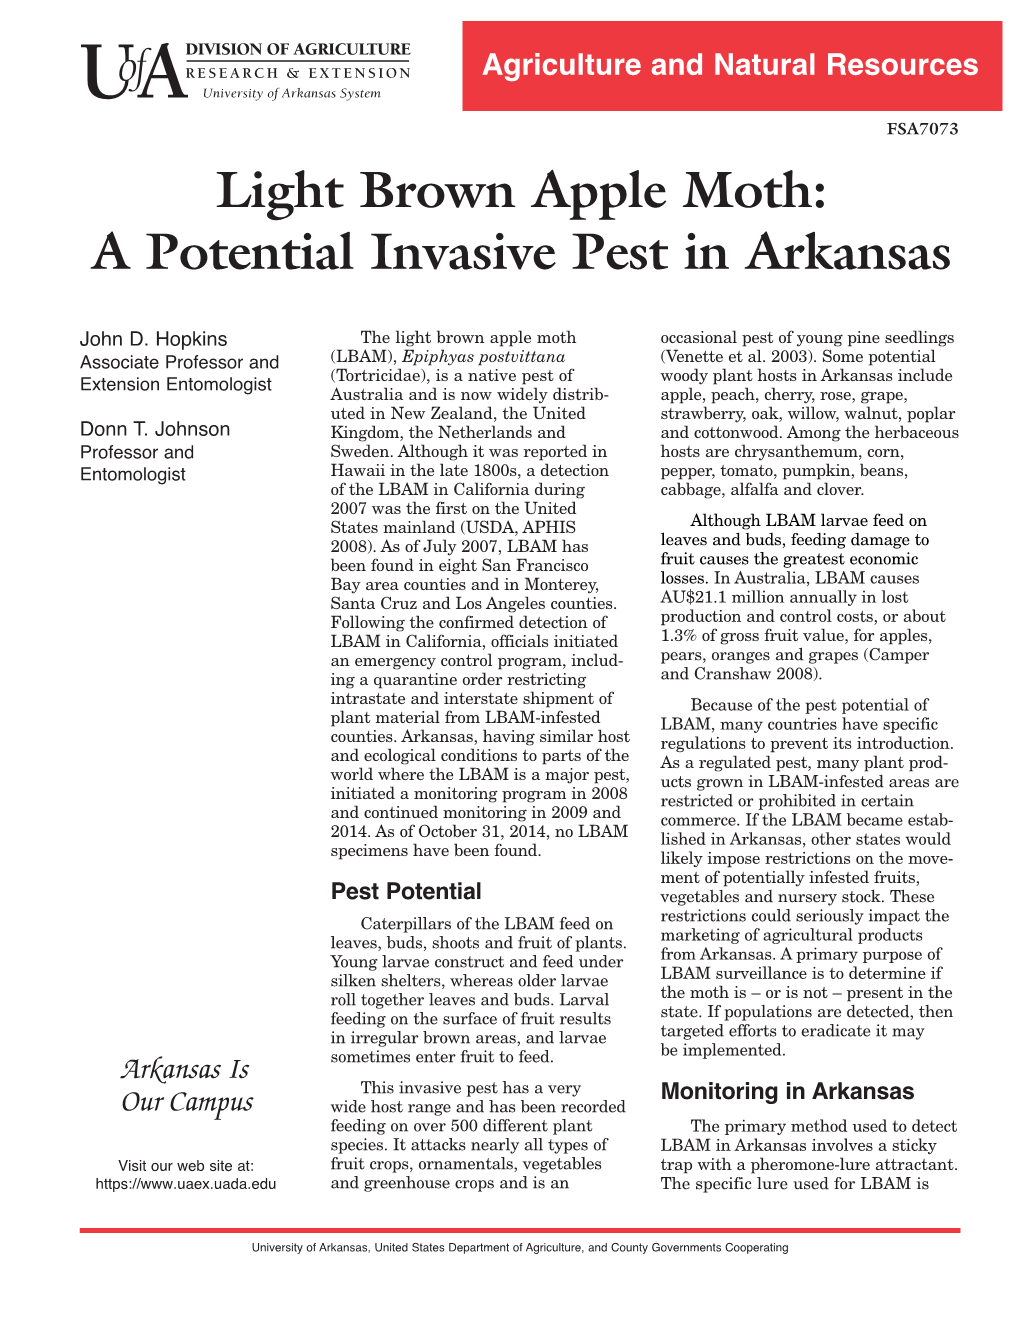 Light Brown Apple Moth: a Potential Invasive Pest in Arkansas